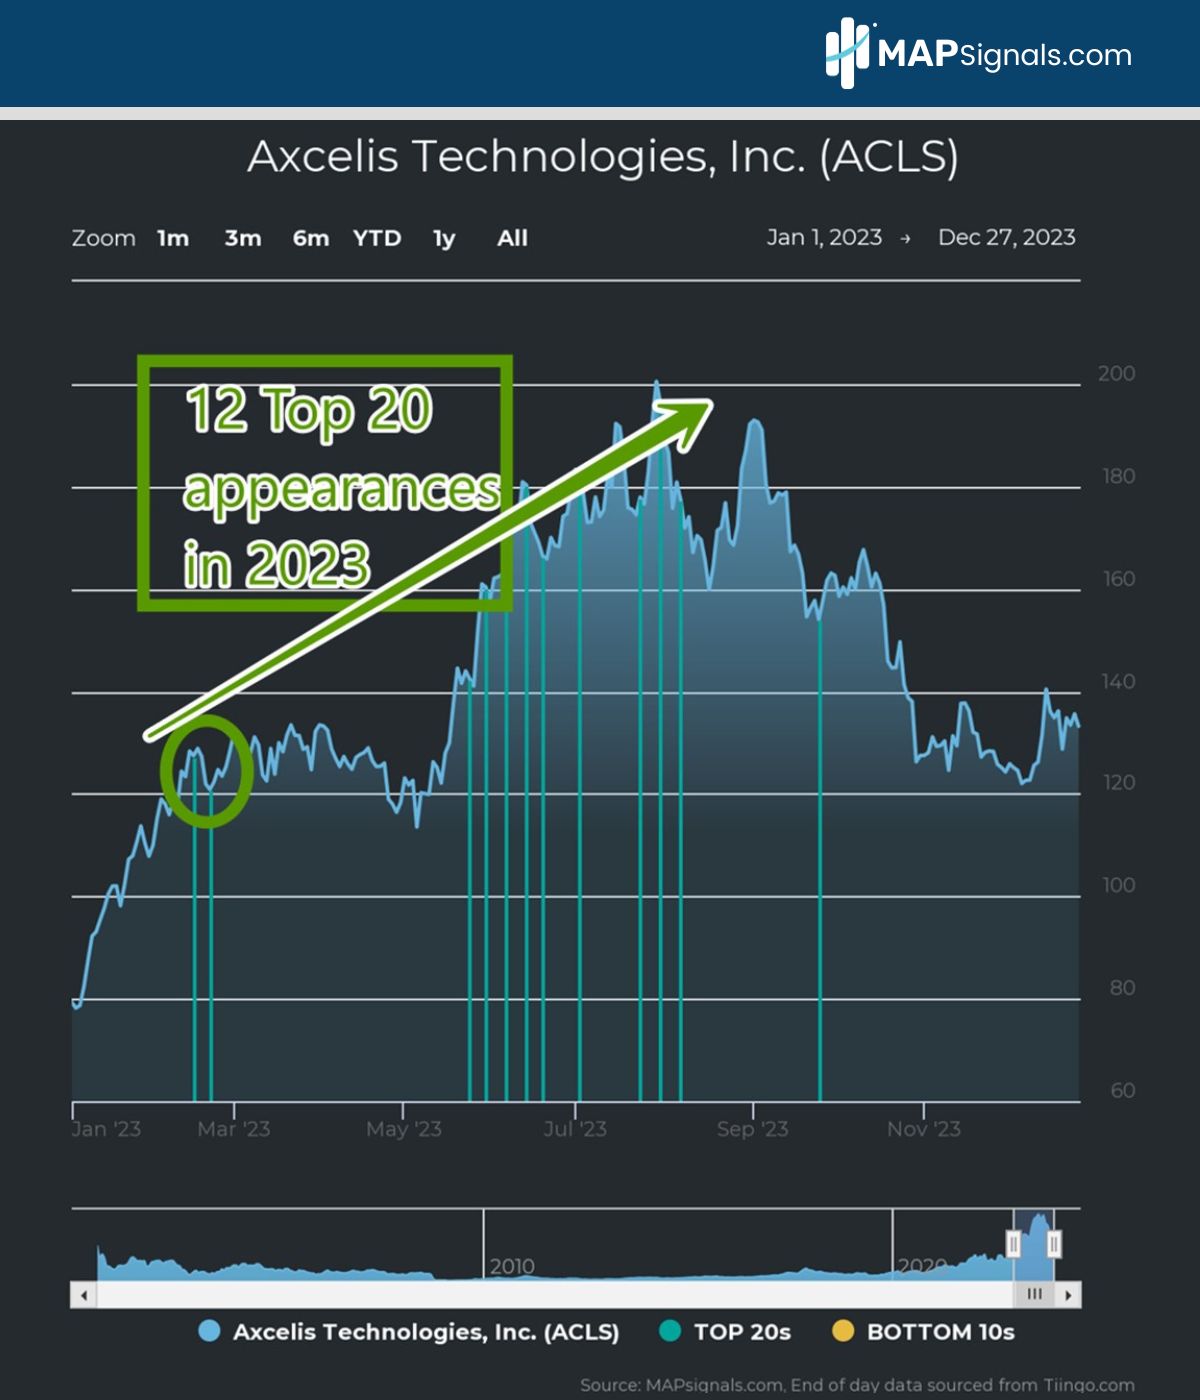 Axcelis Technologies, Inc. (ACLS) | MAPsignals